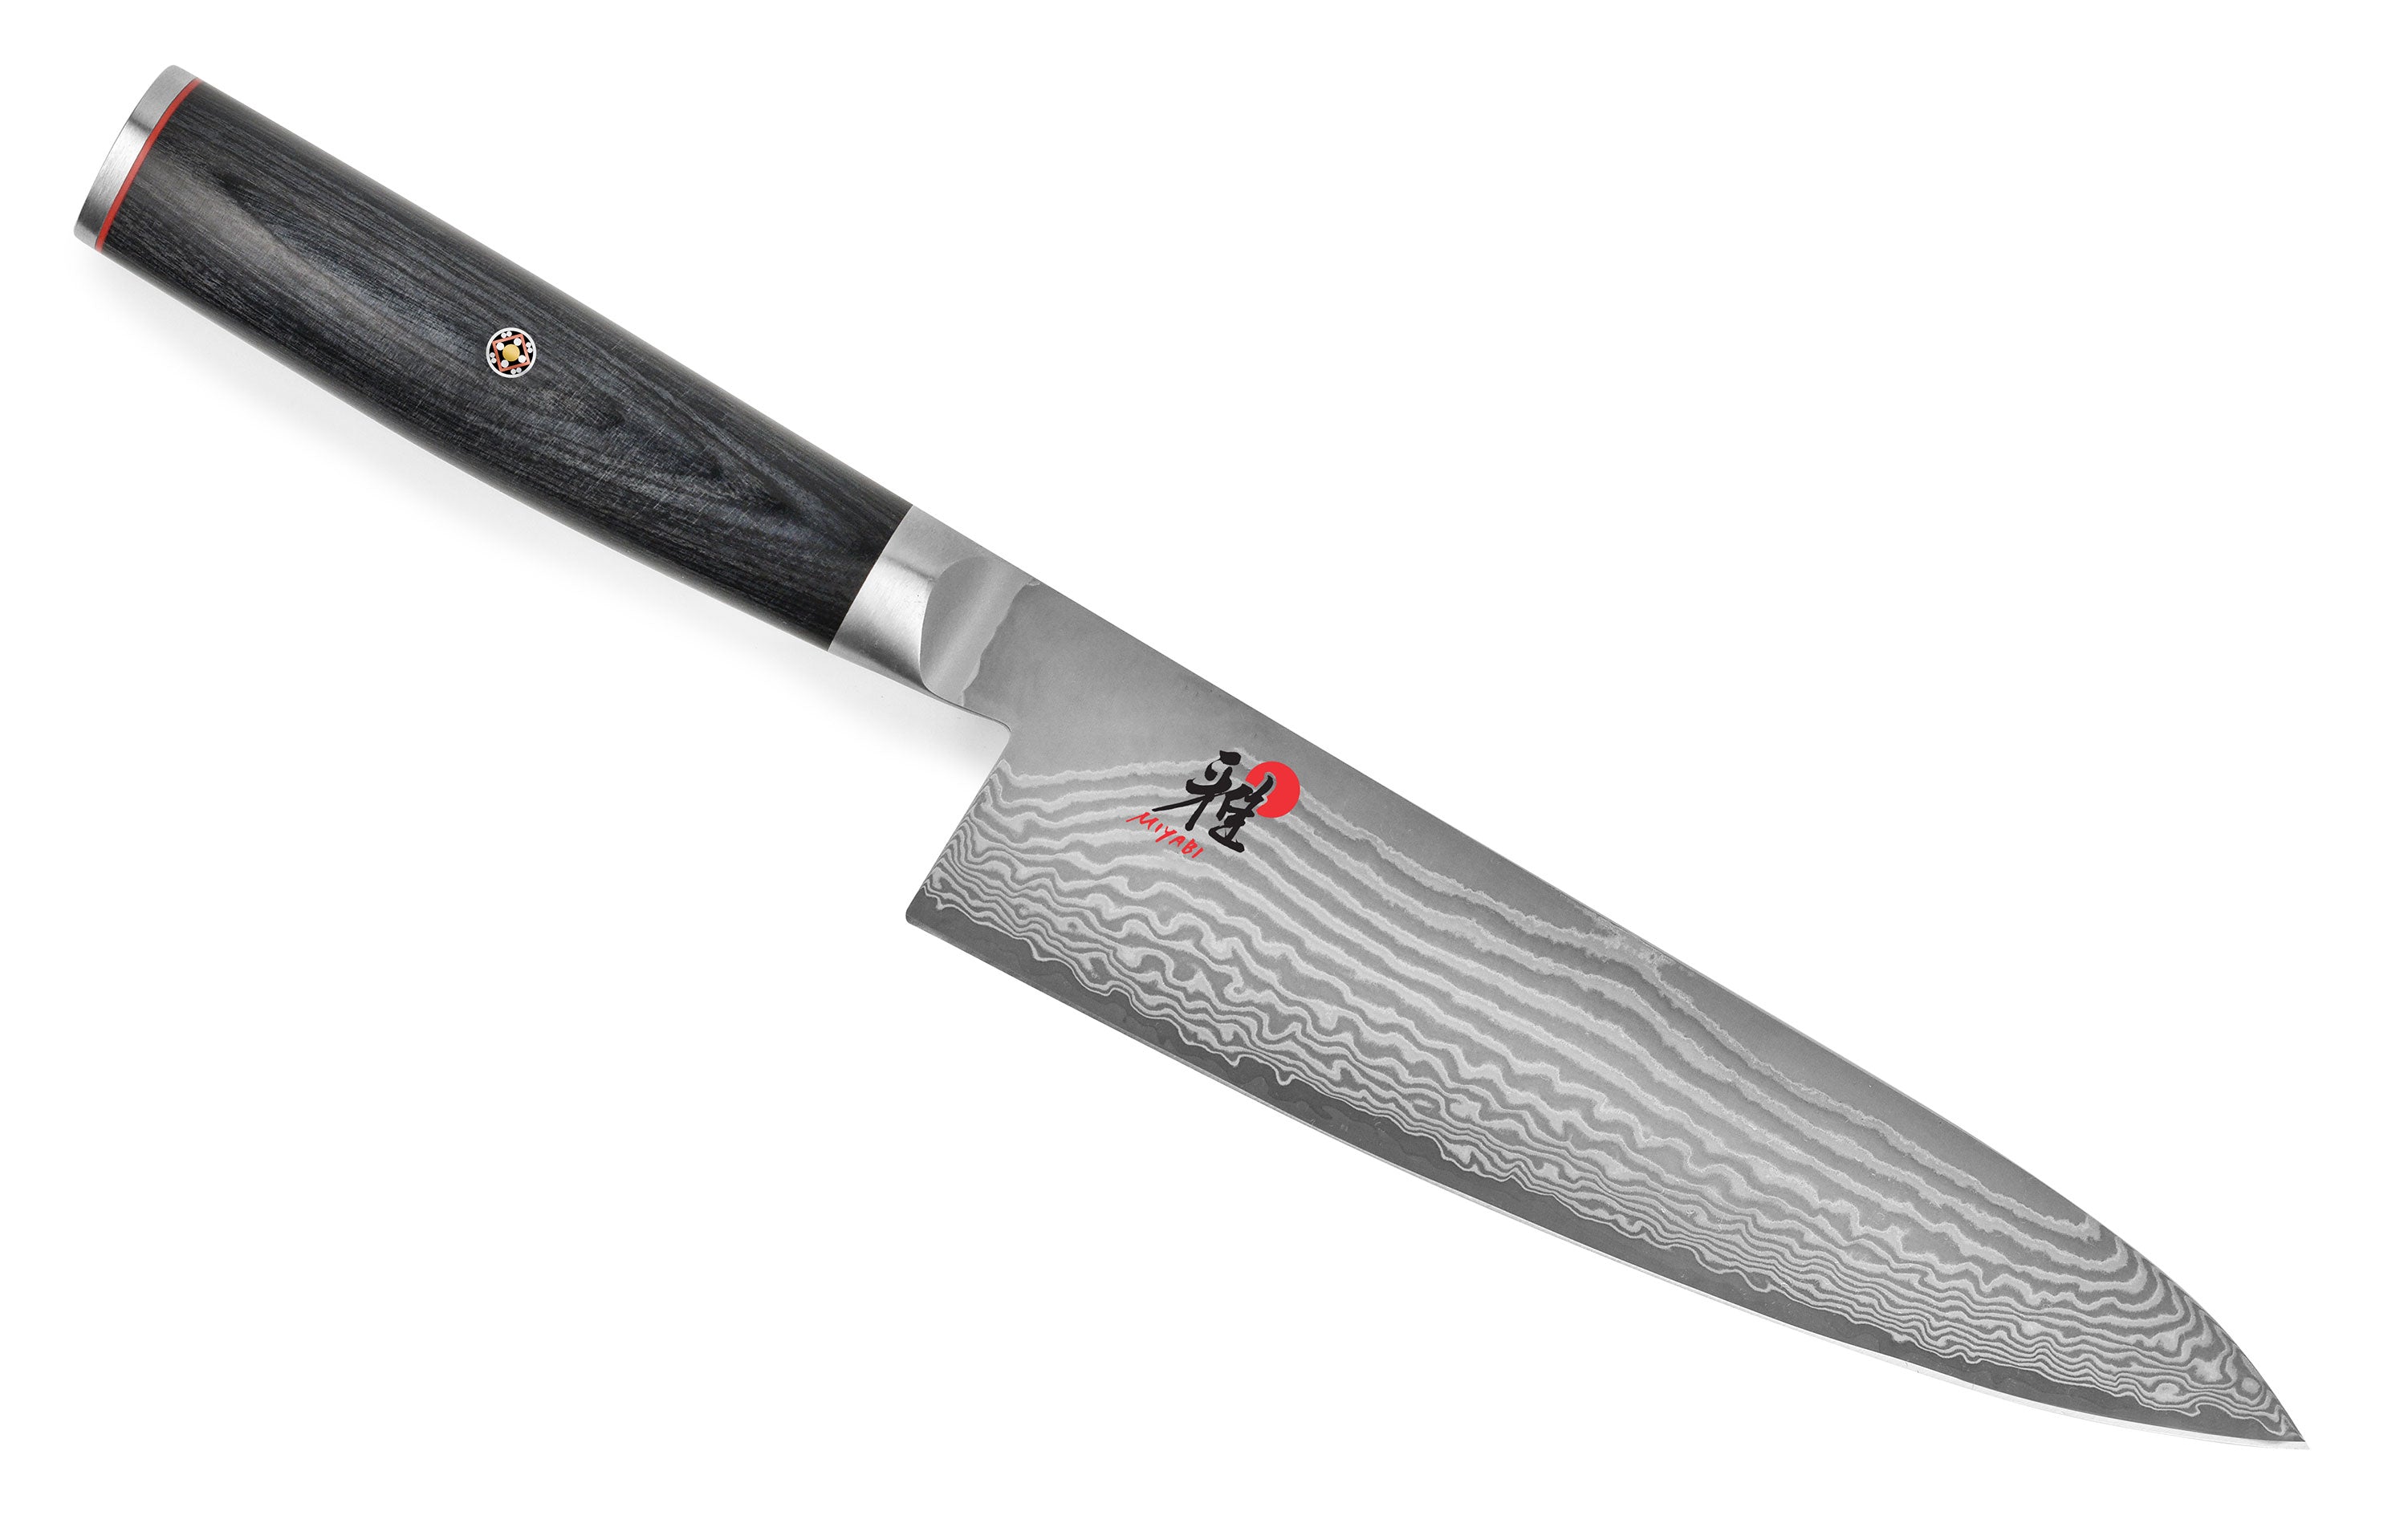 MIYABI KAIZEN II 8-INCH, CHEF'S KNIFE